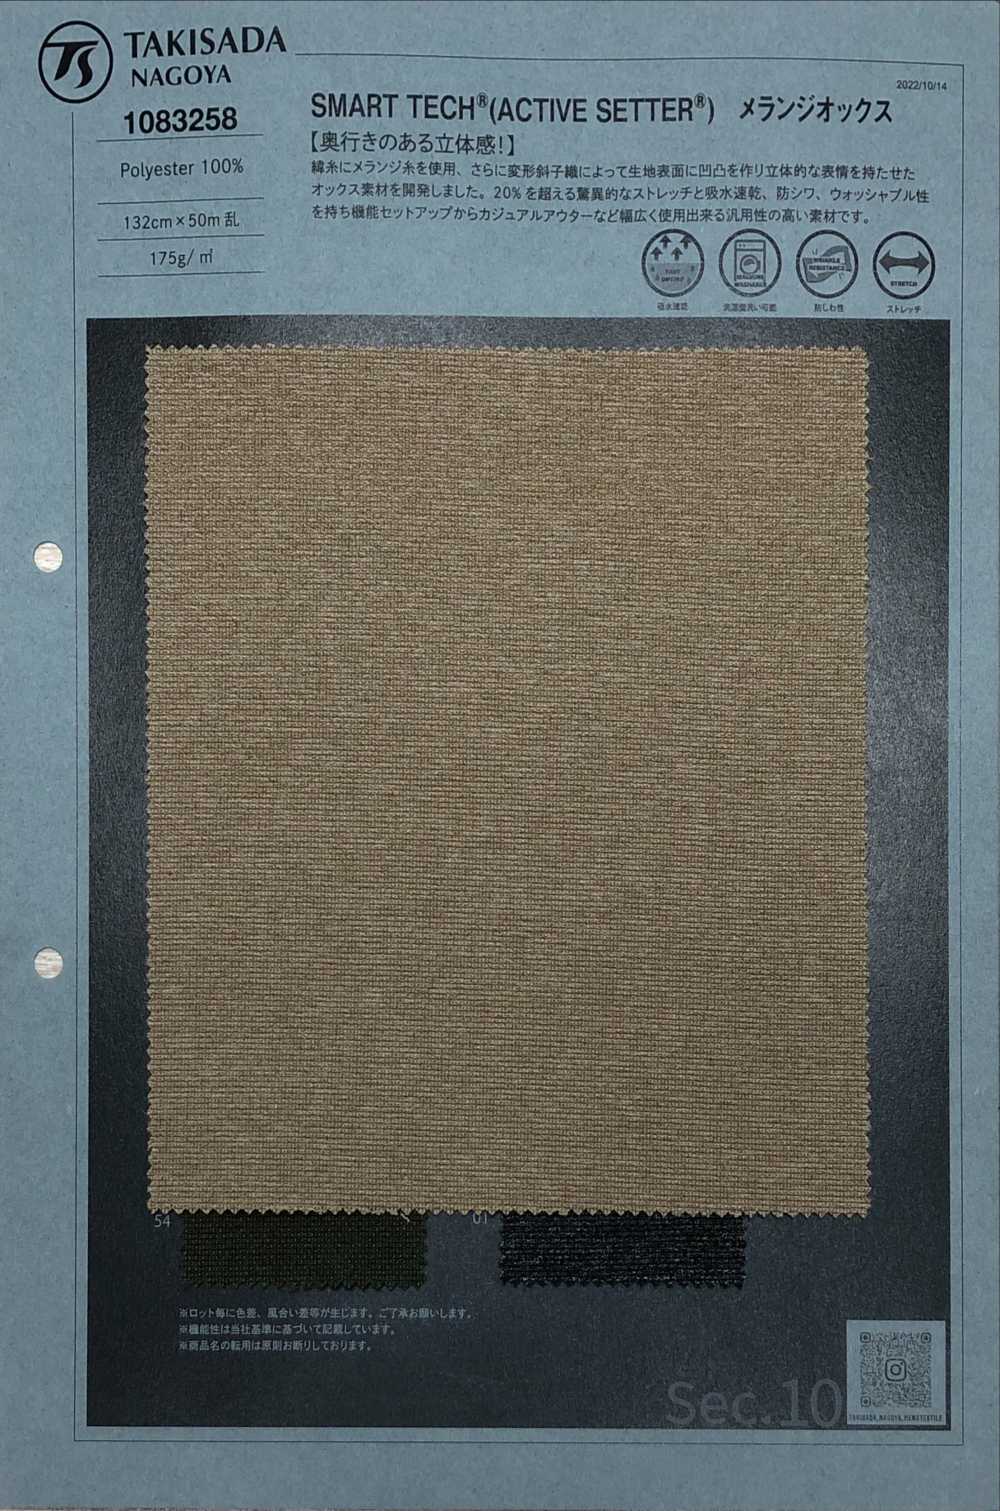 1083258 SMART TECH®(ACTIVE SETTER®) Oxford[Textile / Fabric] Takisada Nagoya